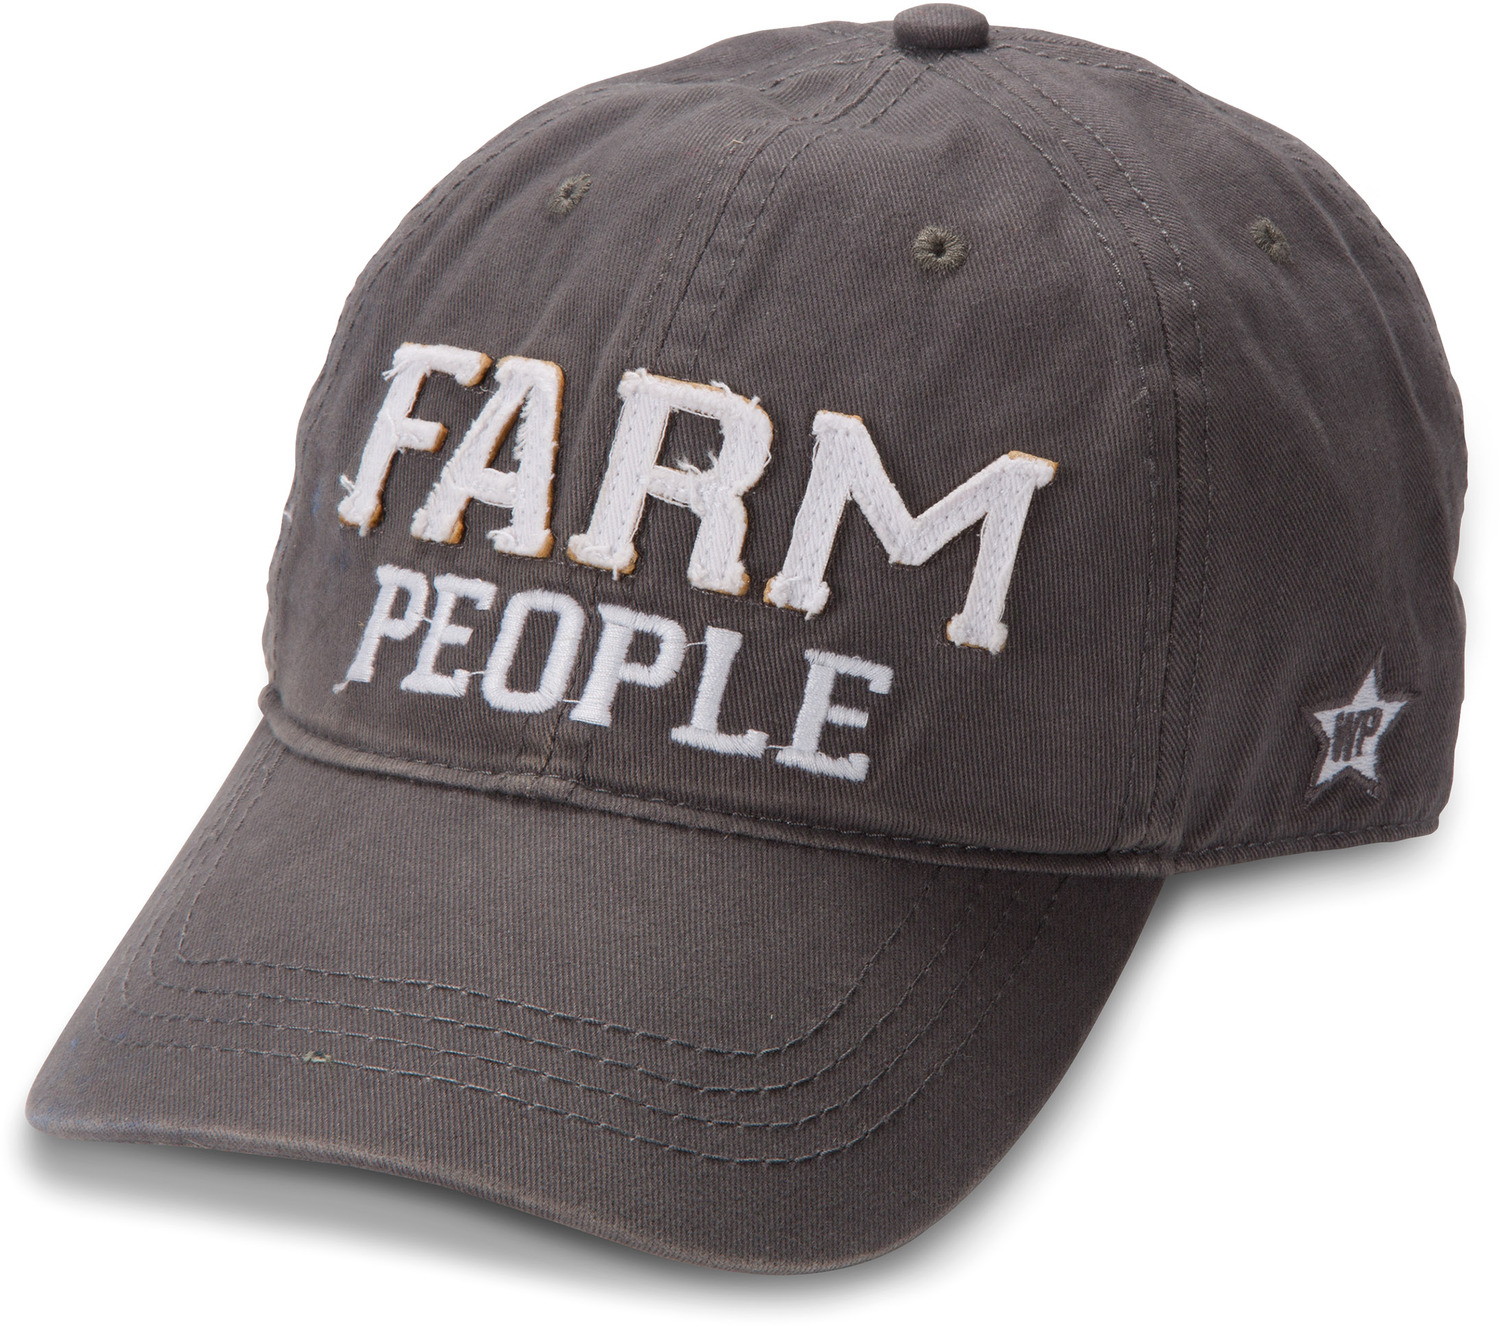 Farm People by We People - Farm People - Dark Gray Adjustable Hat